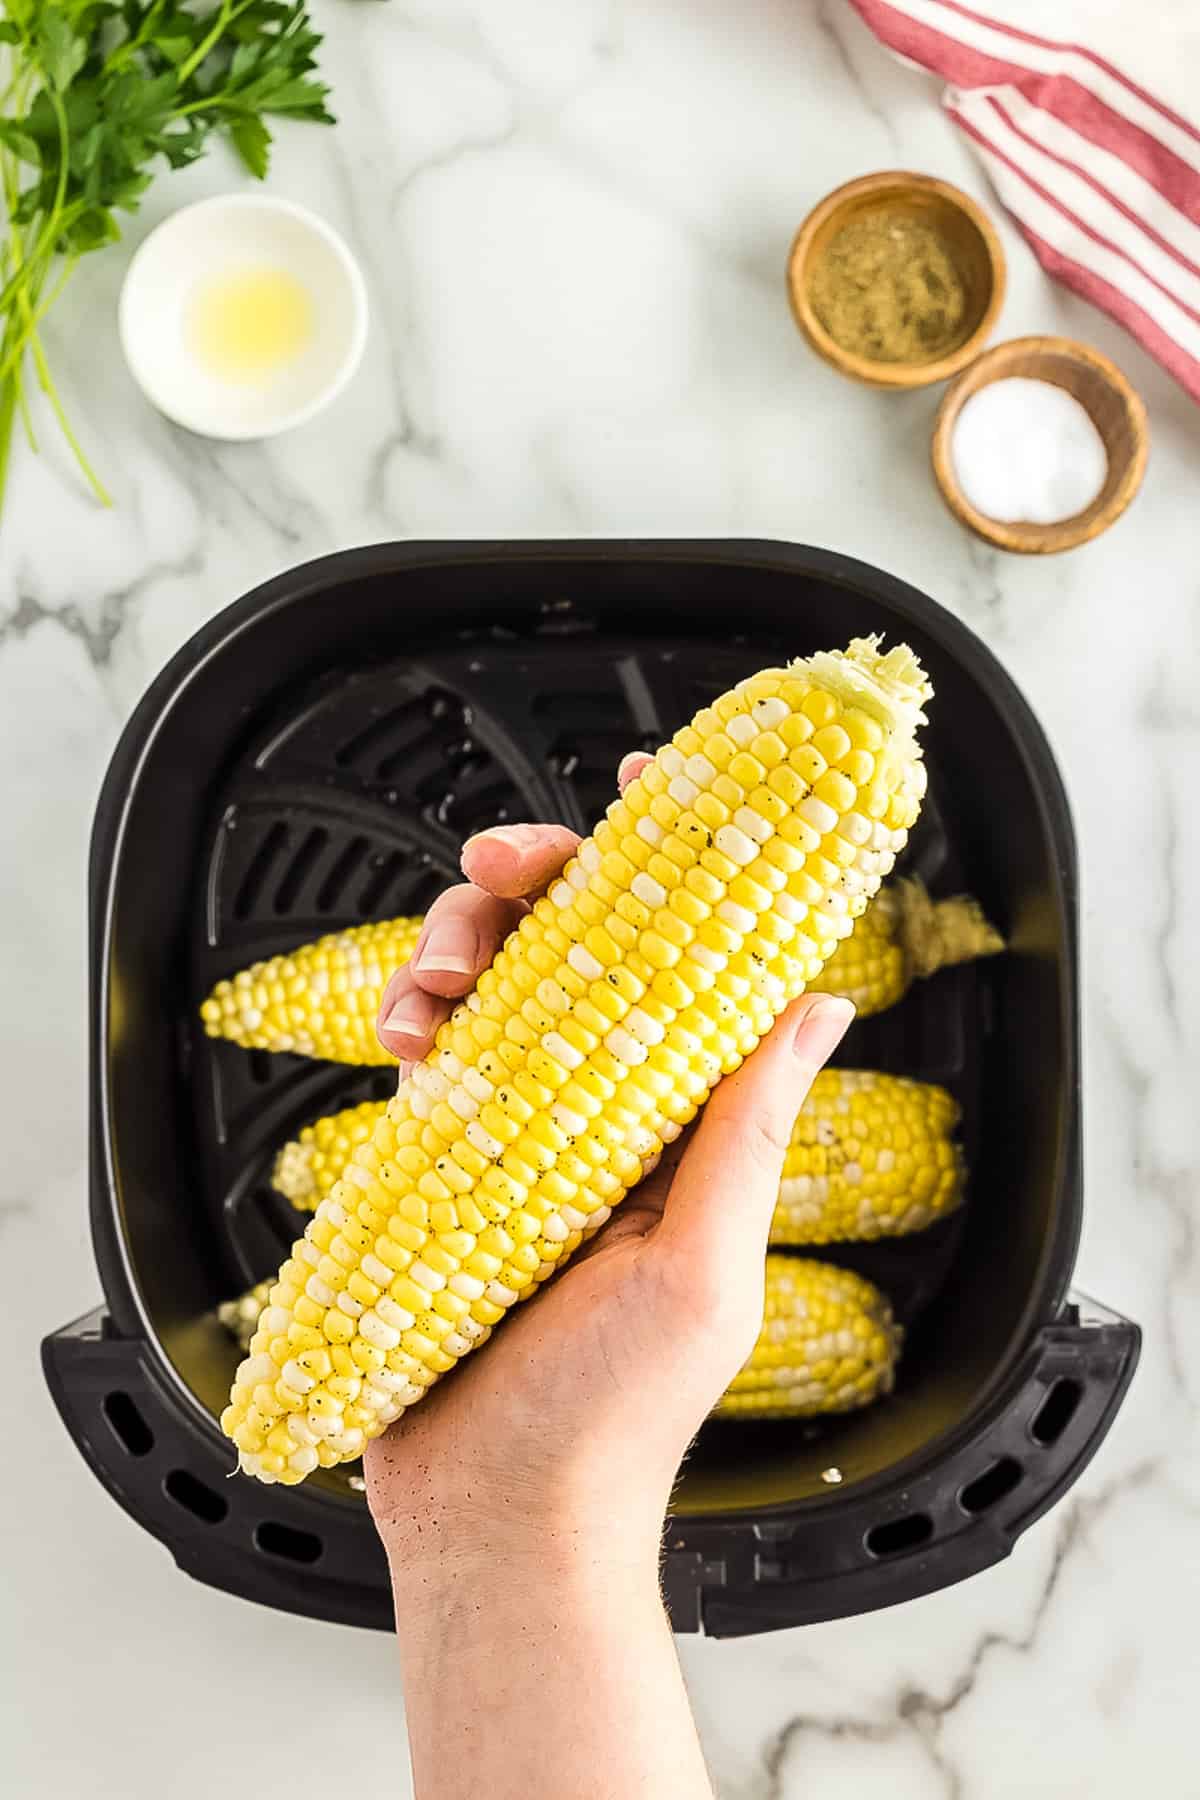 Hand holding cob of corn